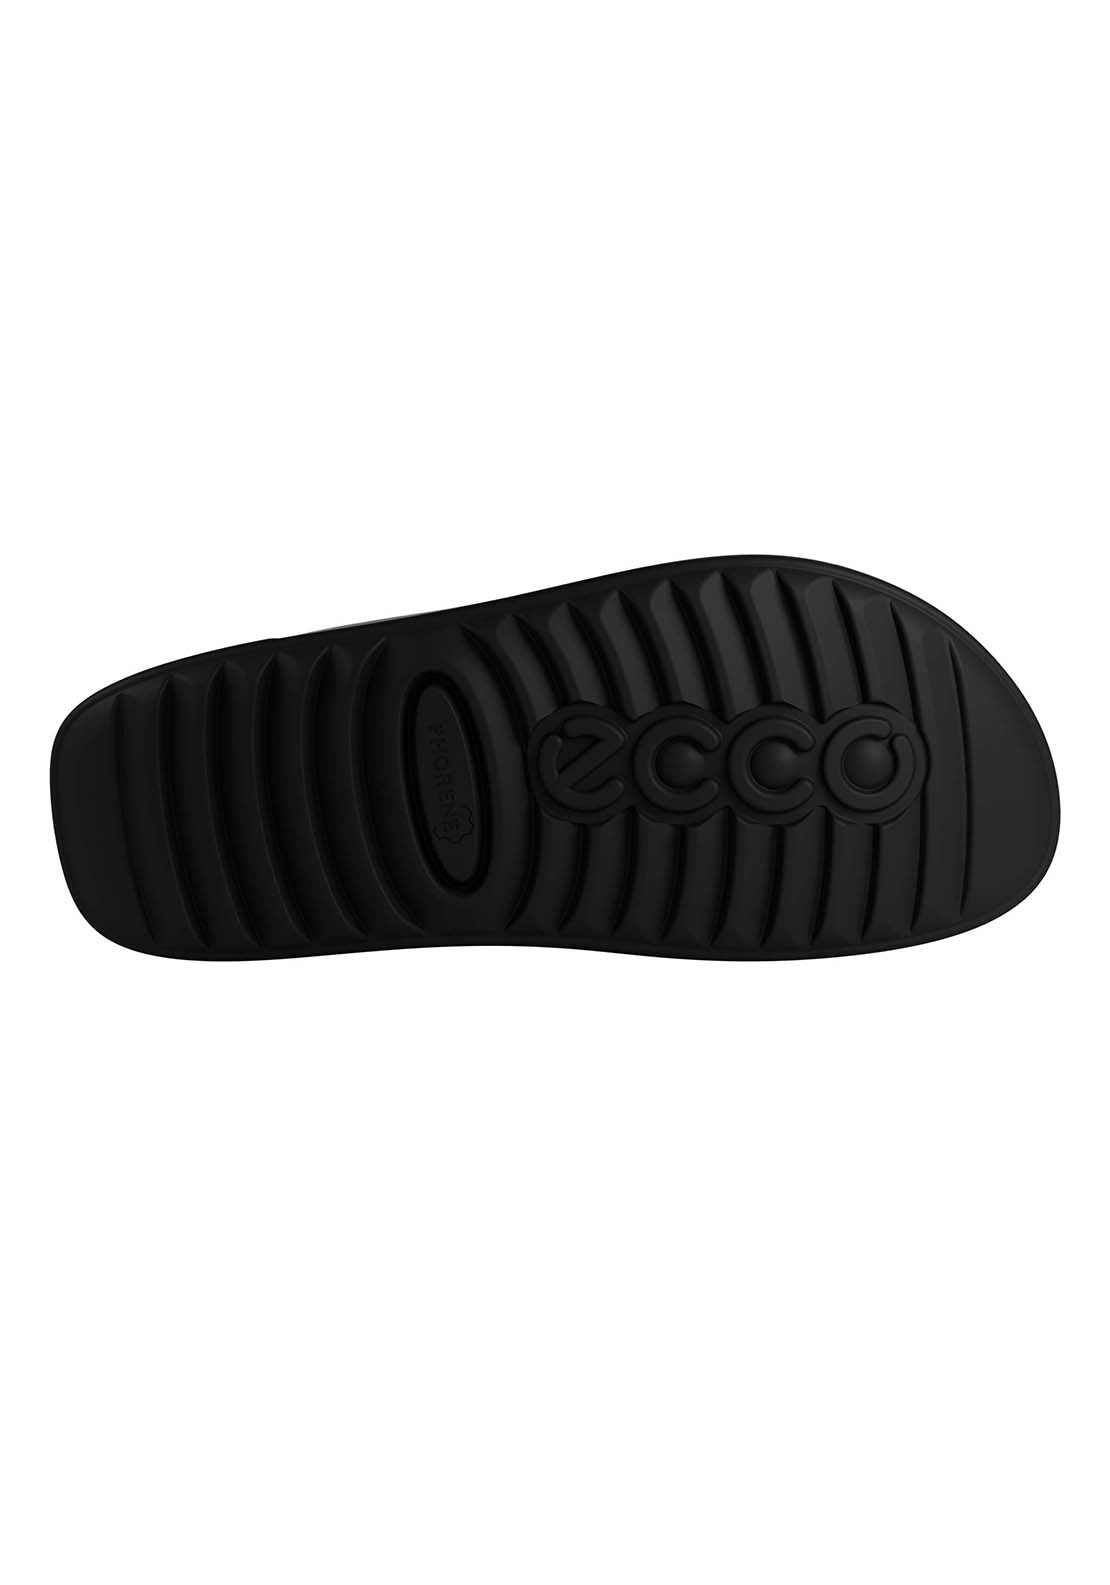 Ecco Cozmo Sandal 2 Shaws Department Stores